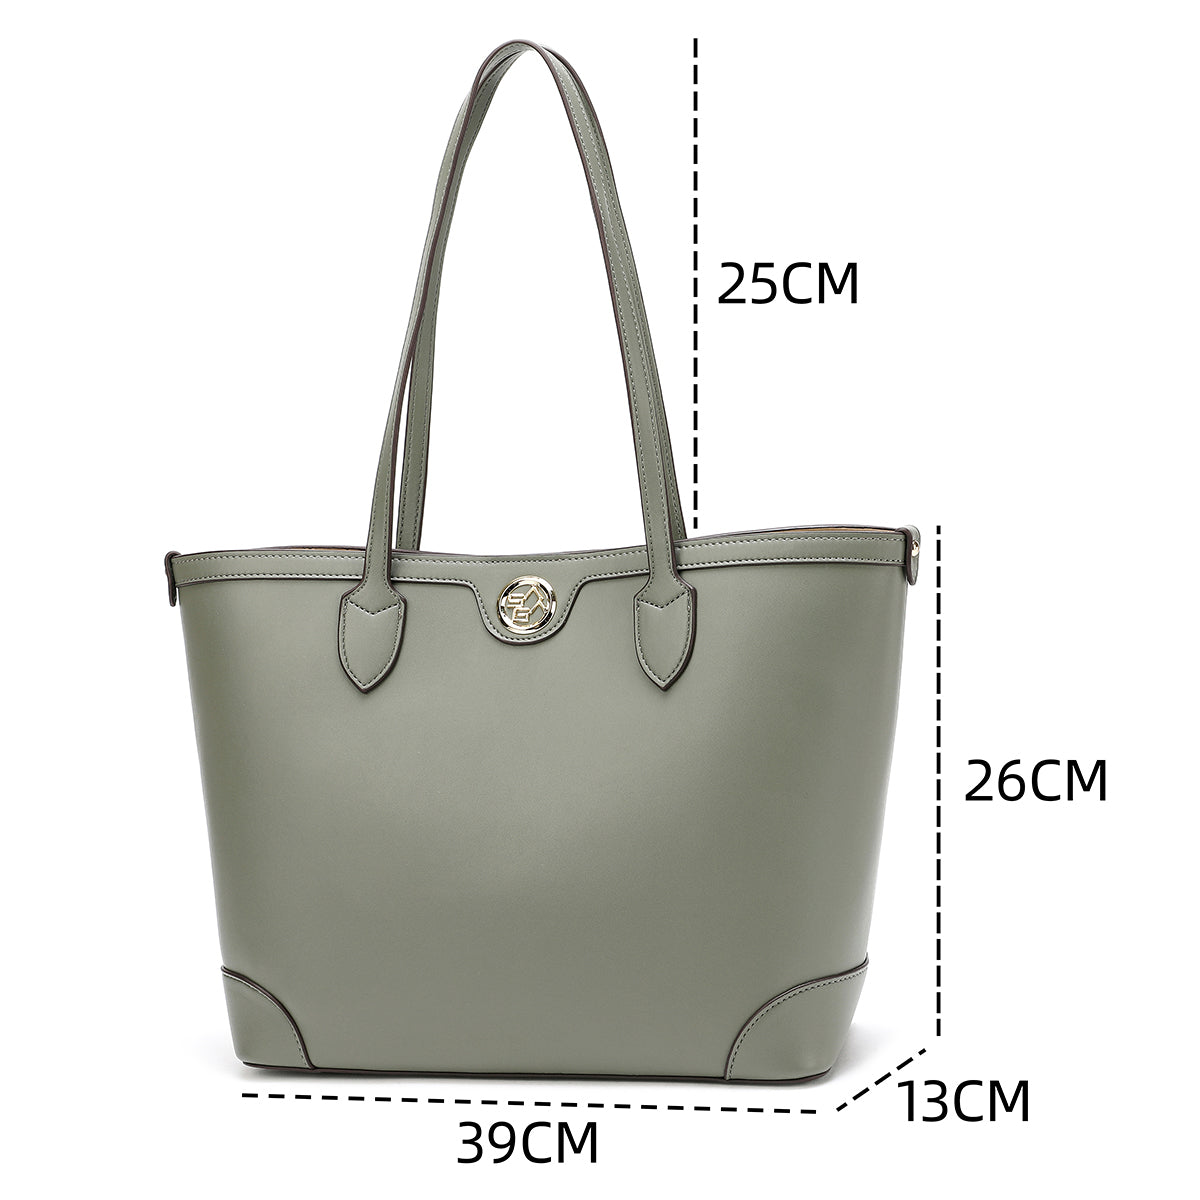 Handbag, wide and simple design, width 39 cm, apple green or black color